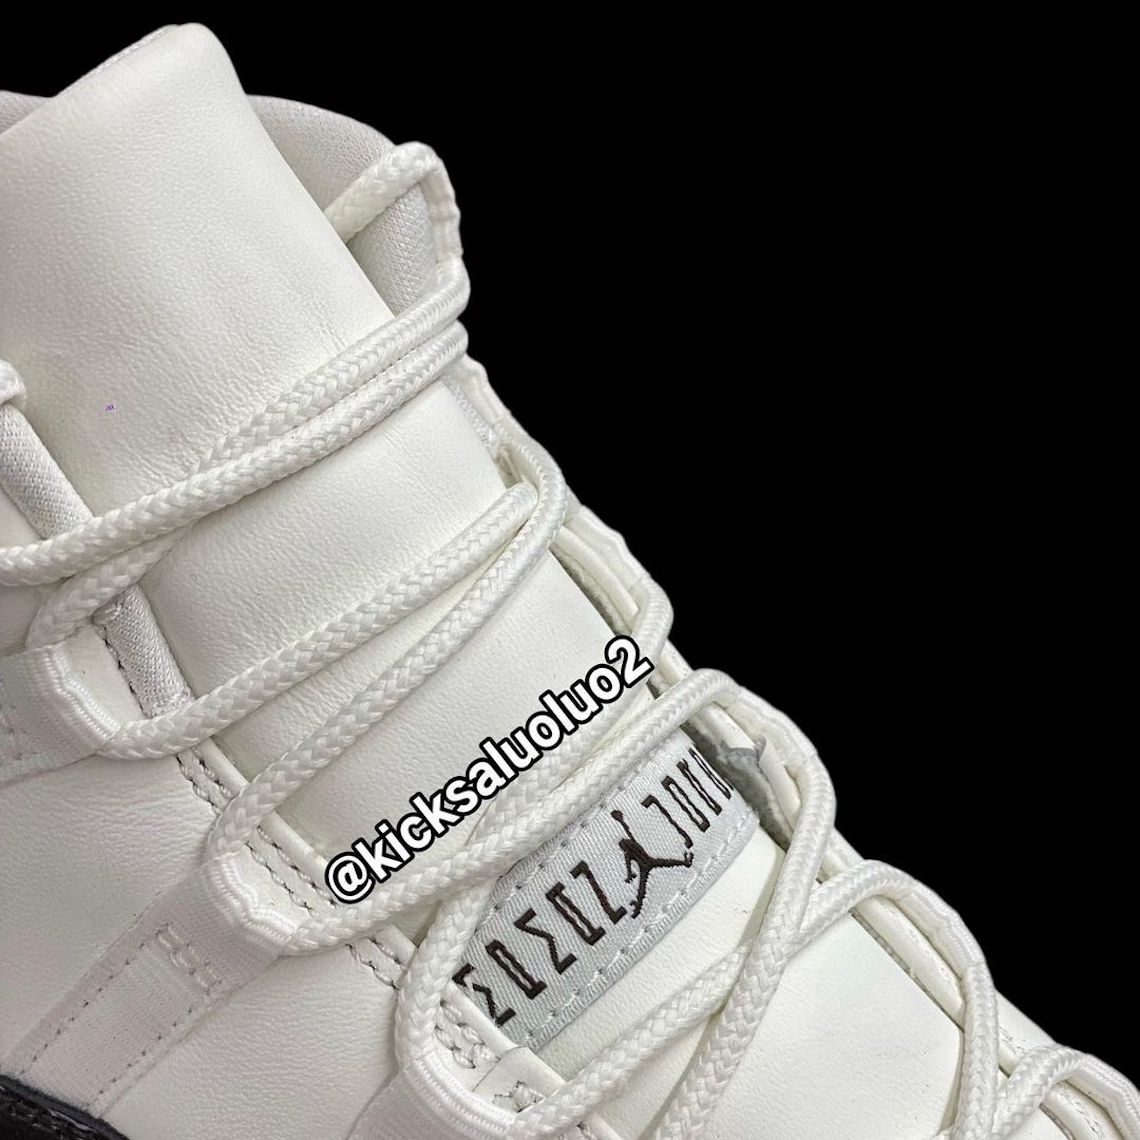 Women's Air Jordan 11 'Neapolitan' (AR0715-101) Release Date. Nike